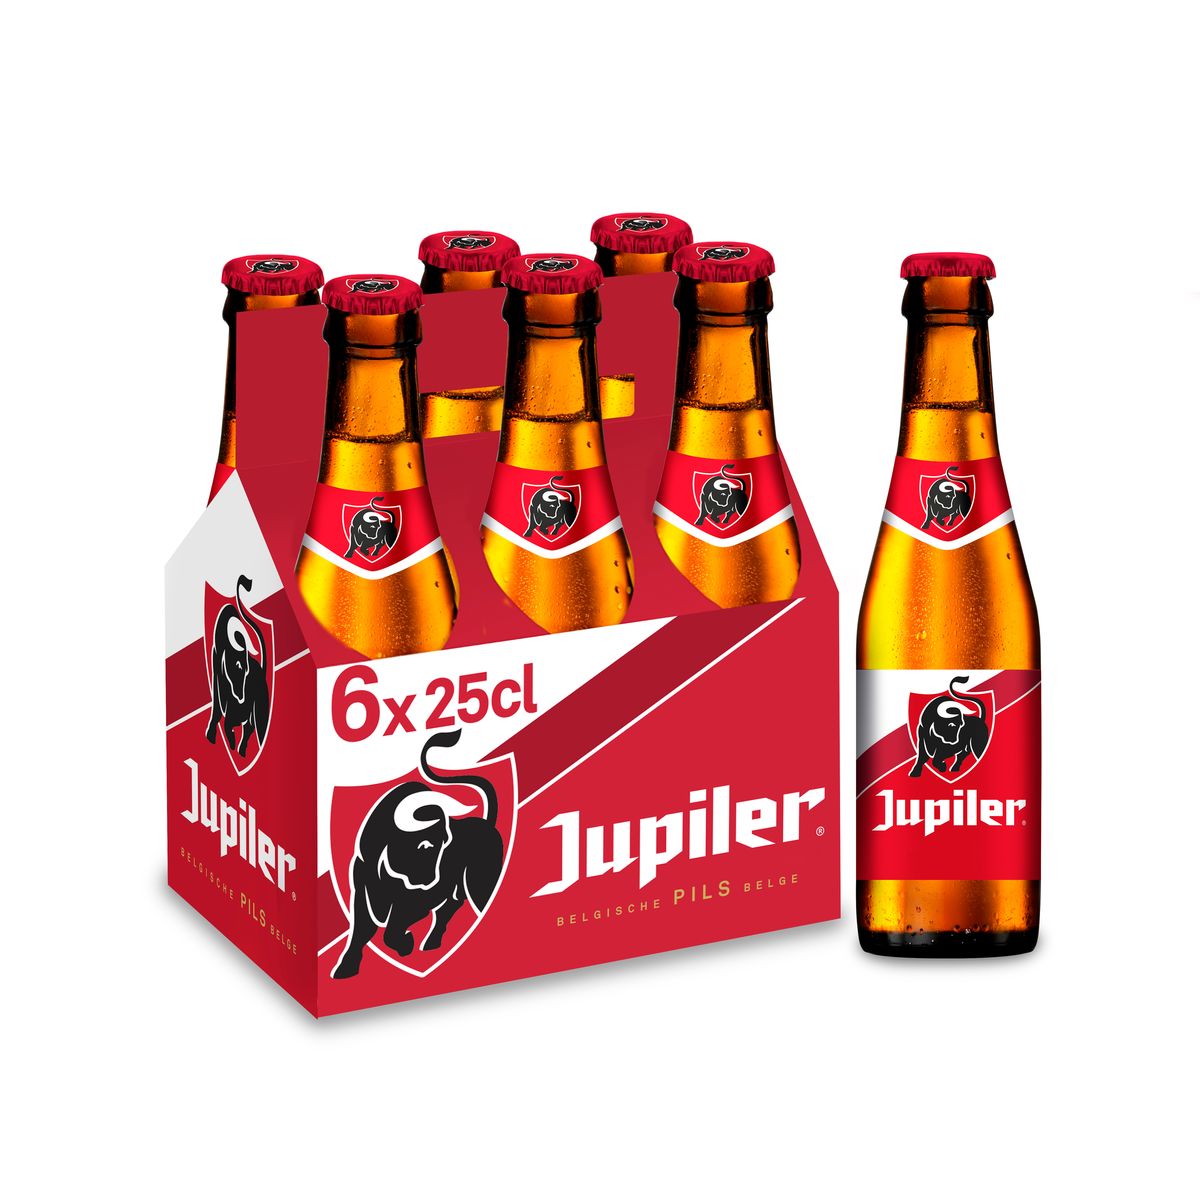 Jupiler Blond Bier Pils 5.2% Alc 6 x 25 cl fles